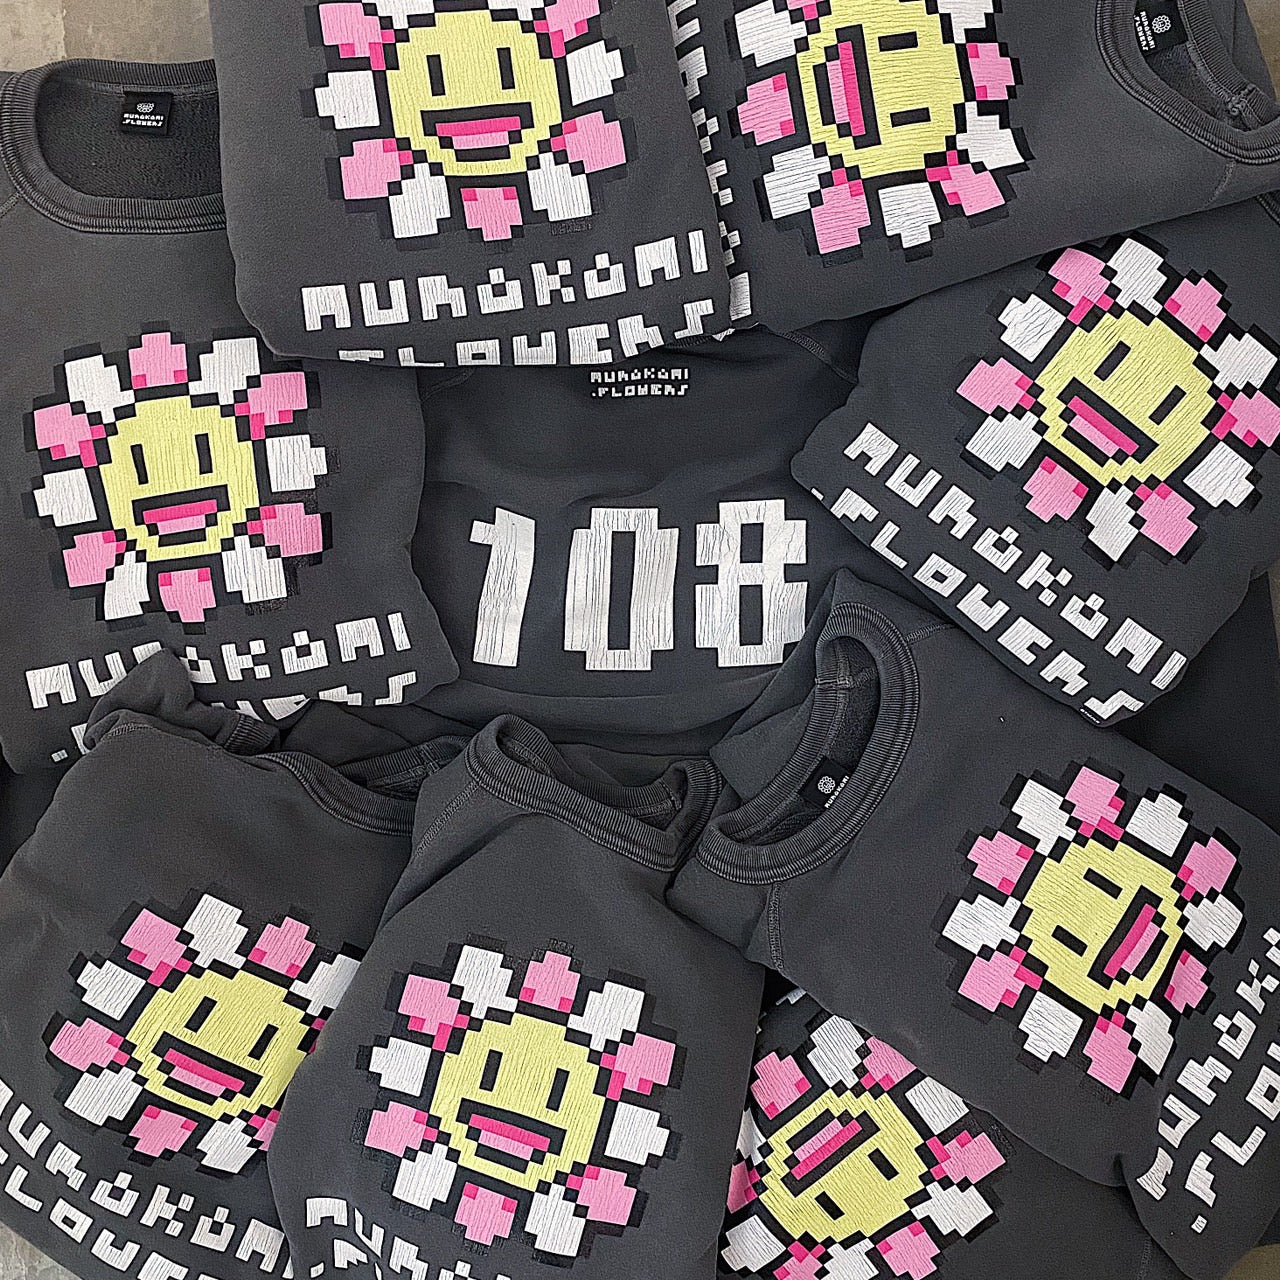 【©Takashi Murakami / kaikai kiki】<br /> New colors for "Murakami.Flowers" sweatshirts and hoodies! Online sales start from 20:00 today, 4/6 (Thursday)!